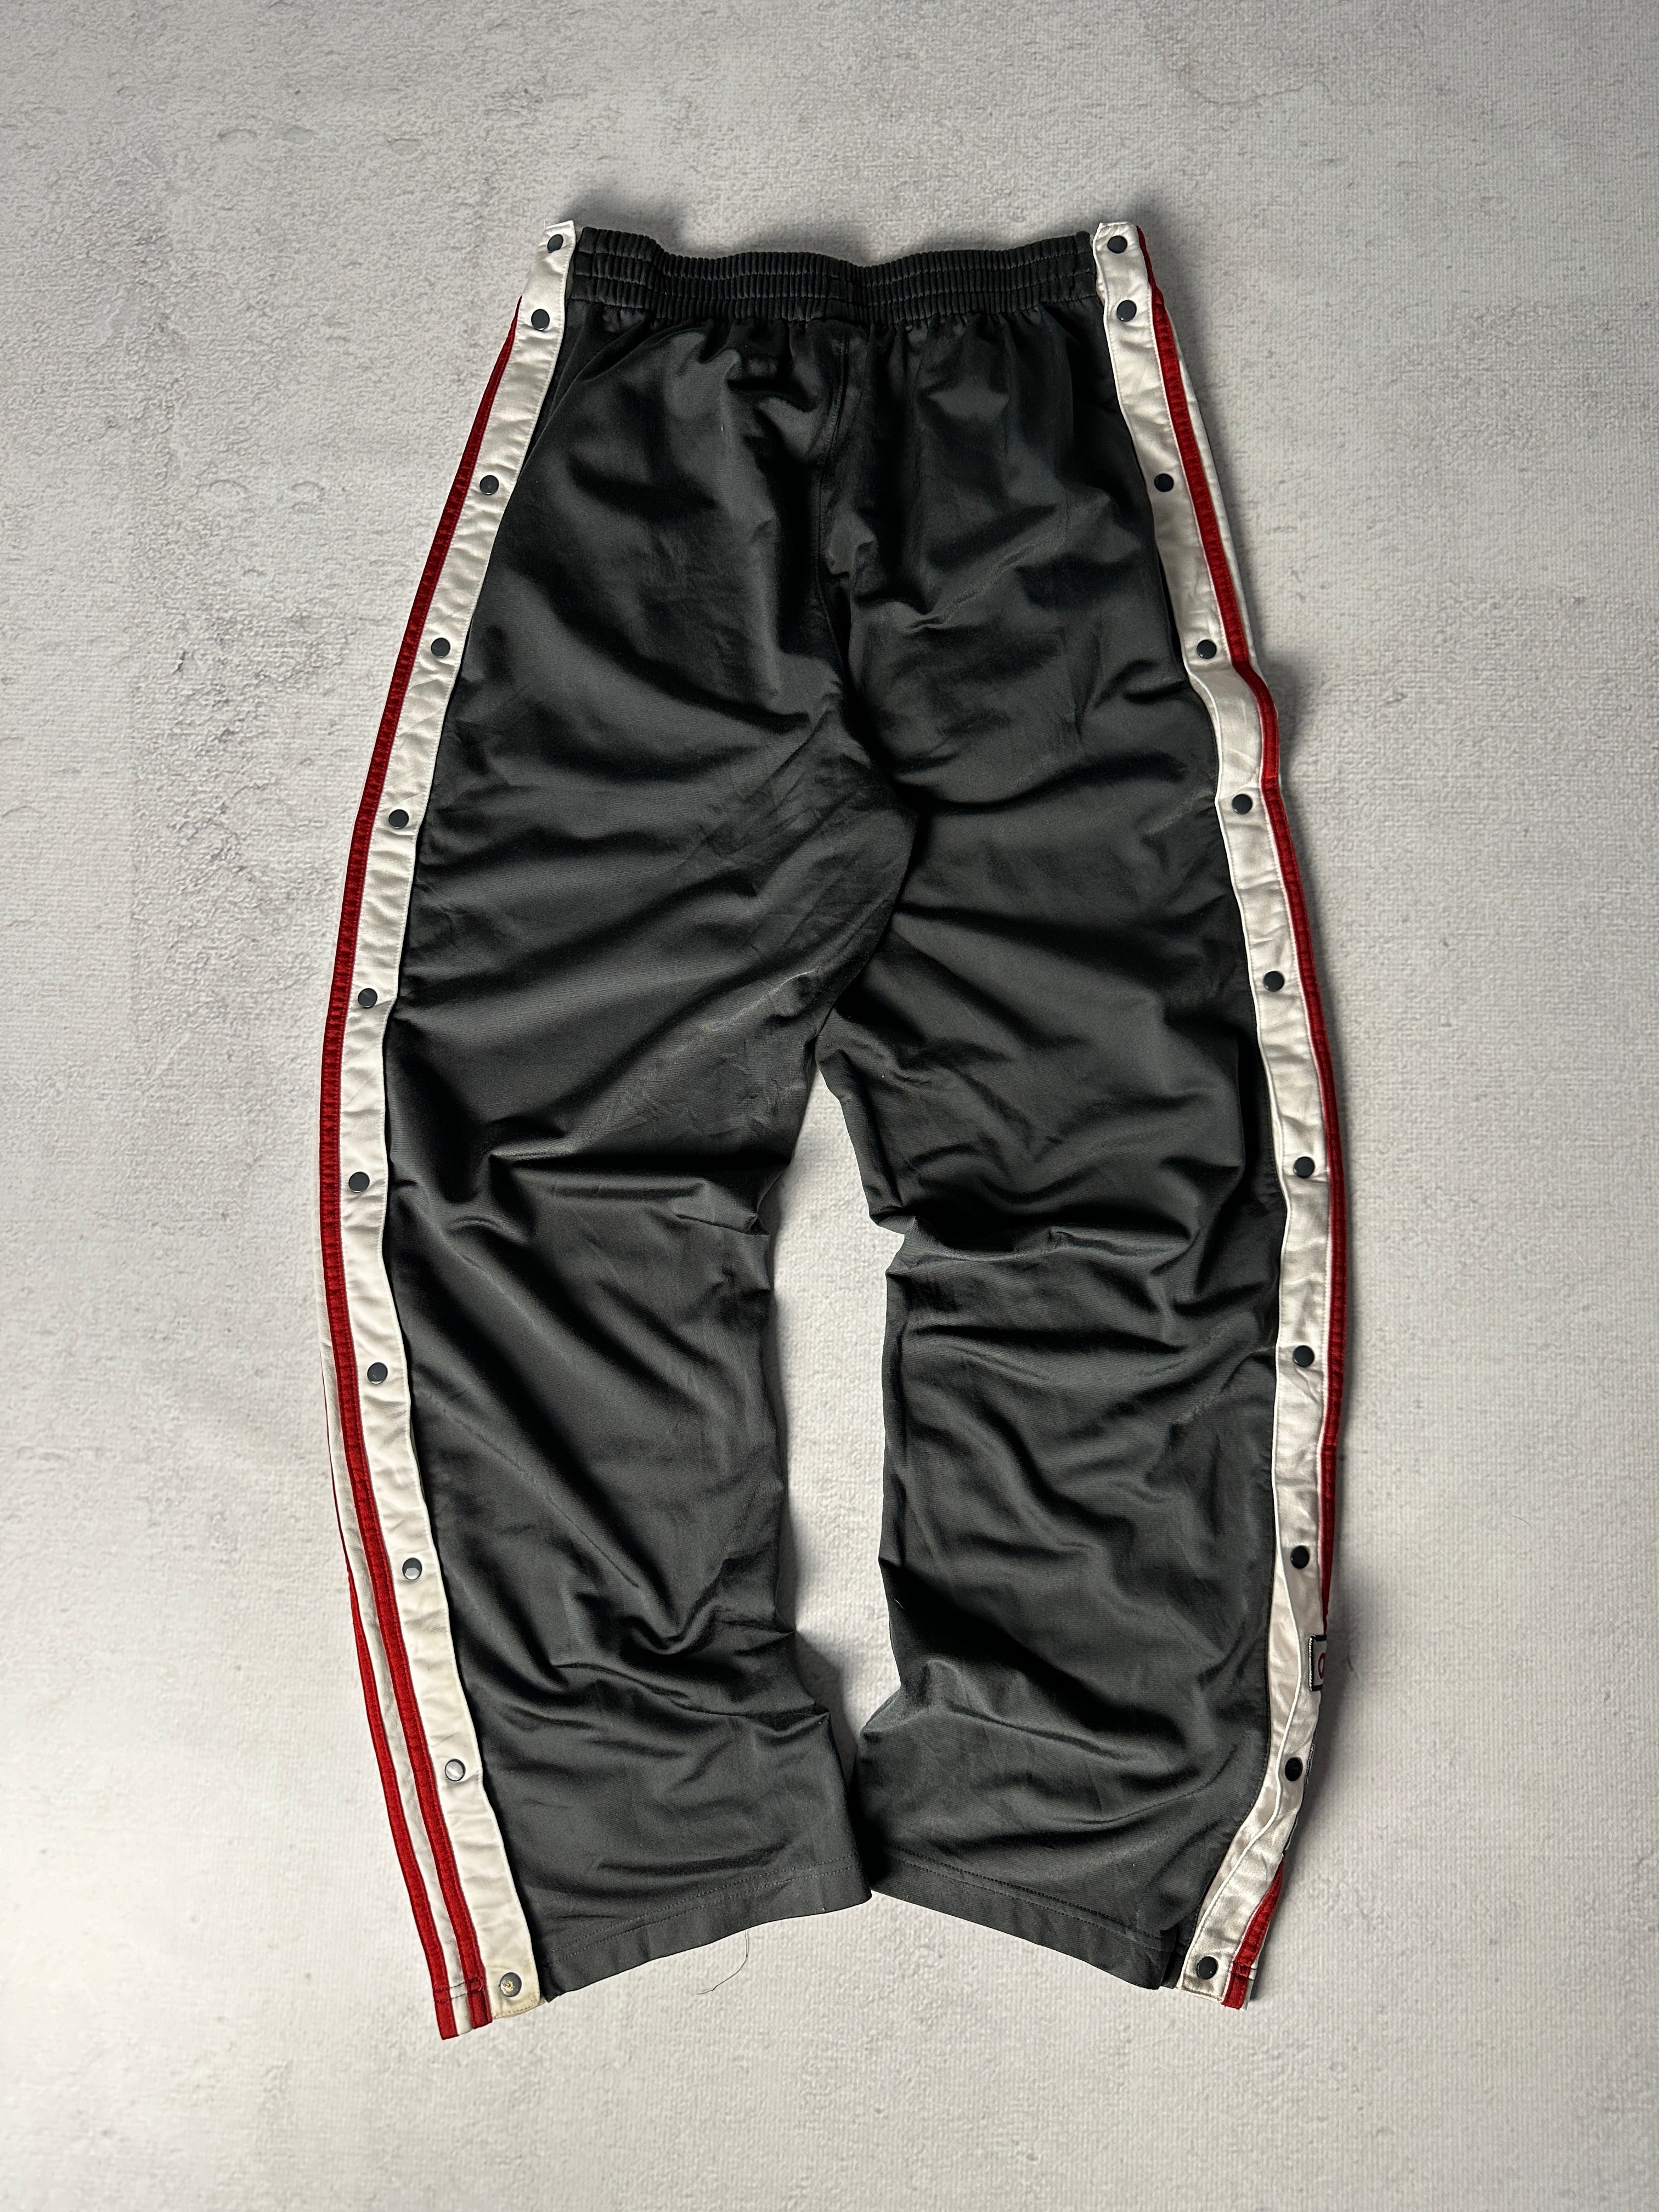 Vintage Adidas Tearaway Track Pants - Men's XL